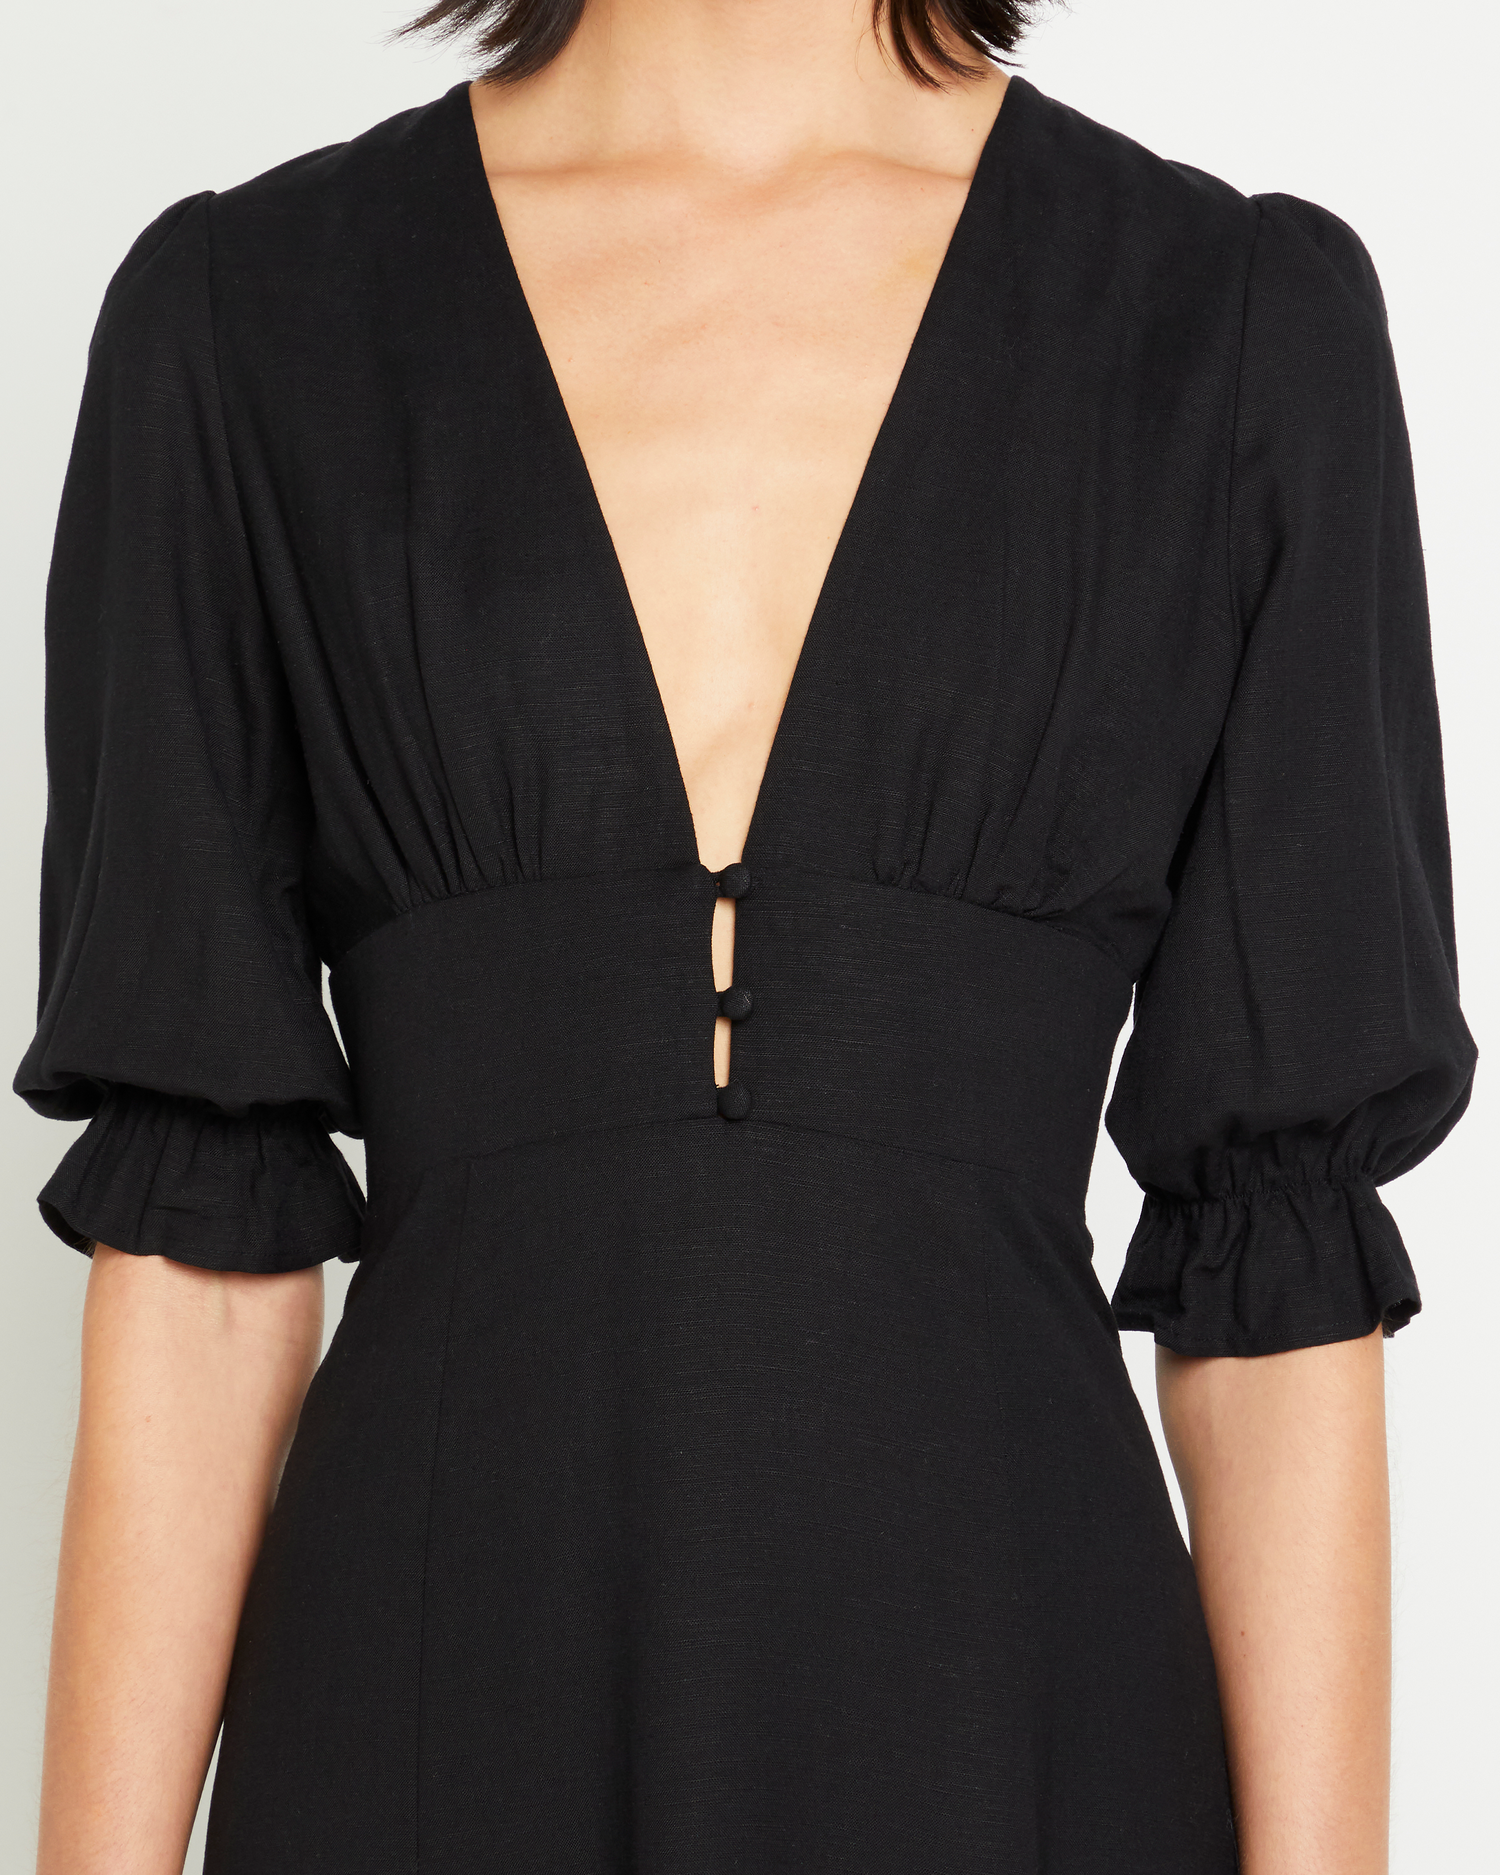 Fifth image of Julien Dress, a black maxi dress, button up, side slit, 3/4 sleeves, V-neck, plung neck, puff sleeves